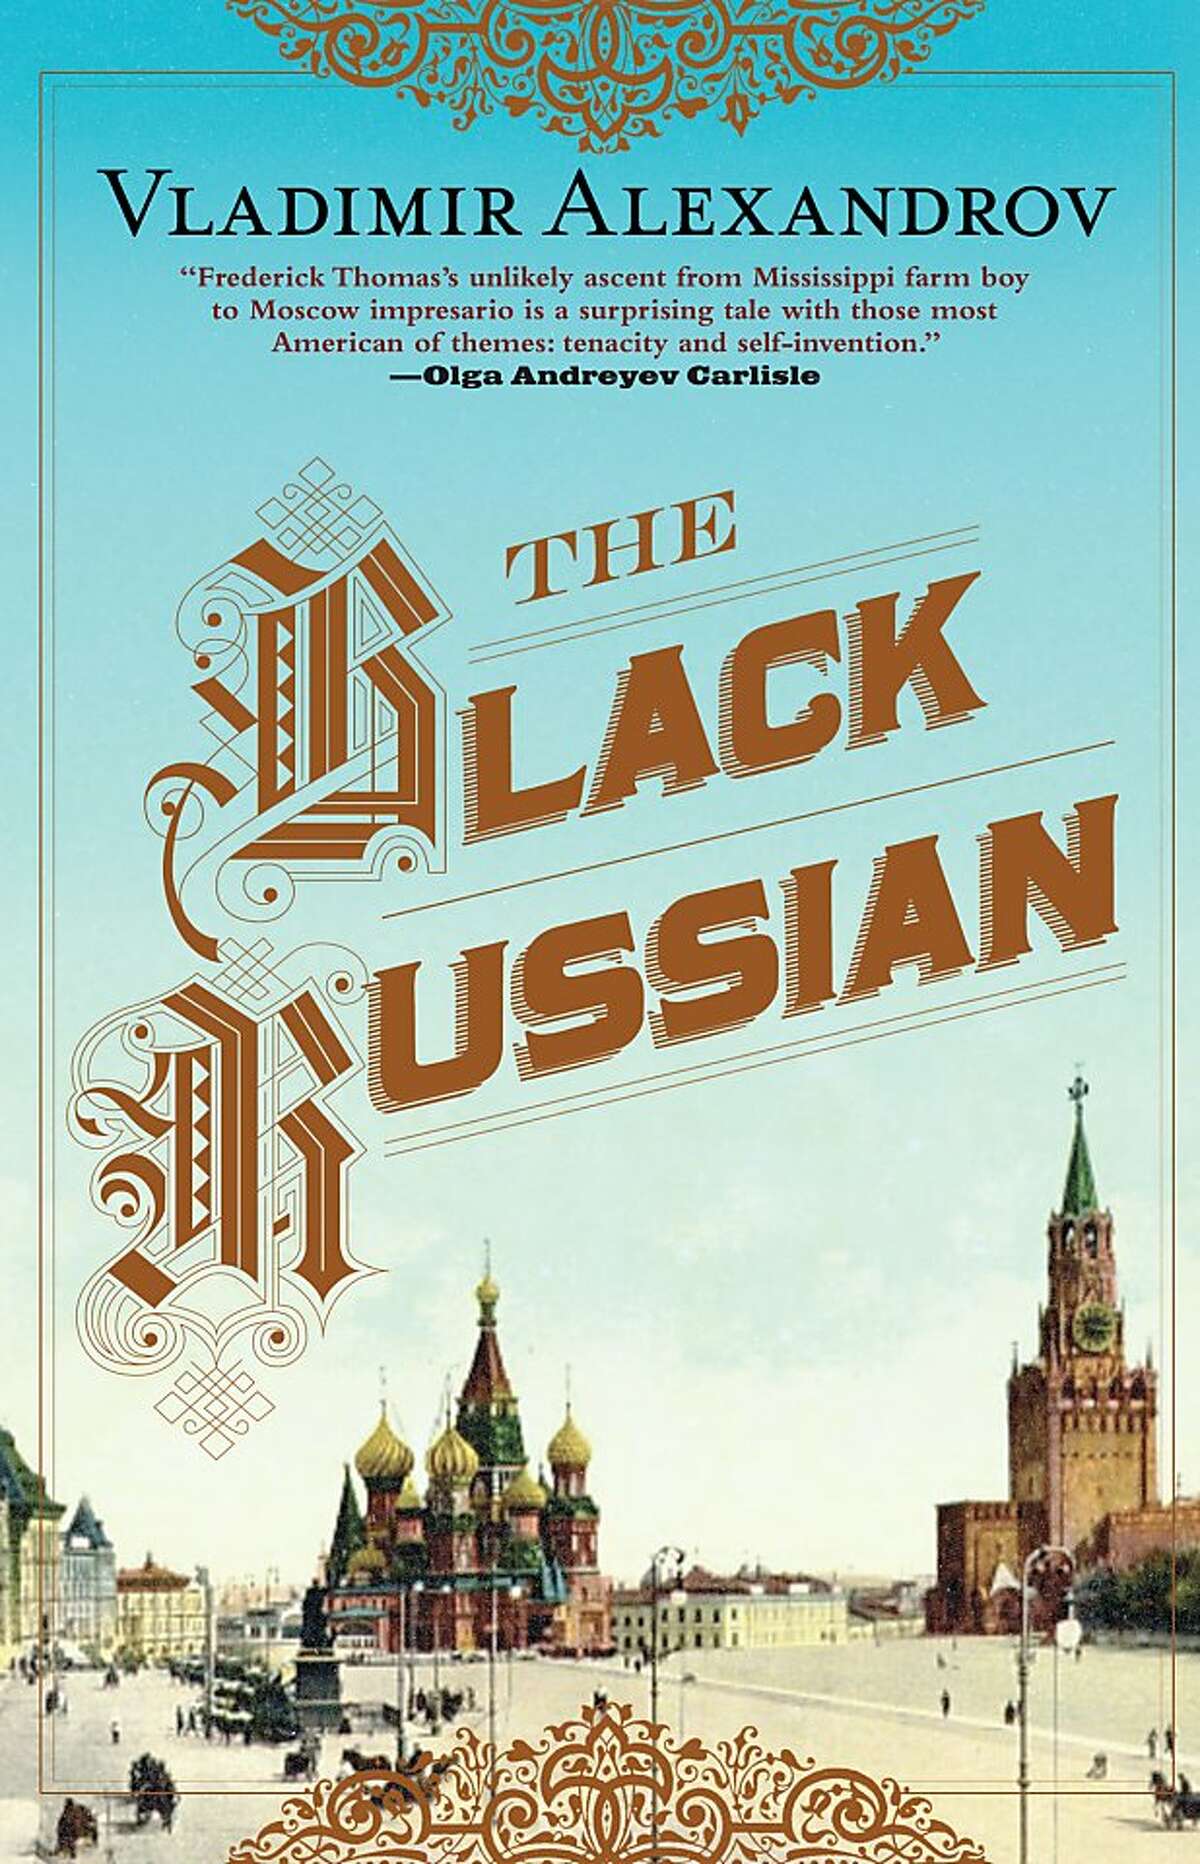 'The Black Russian'